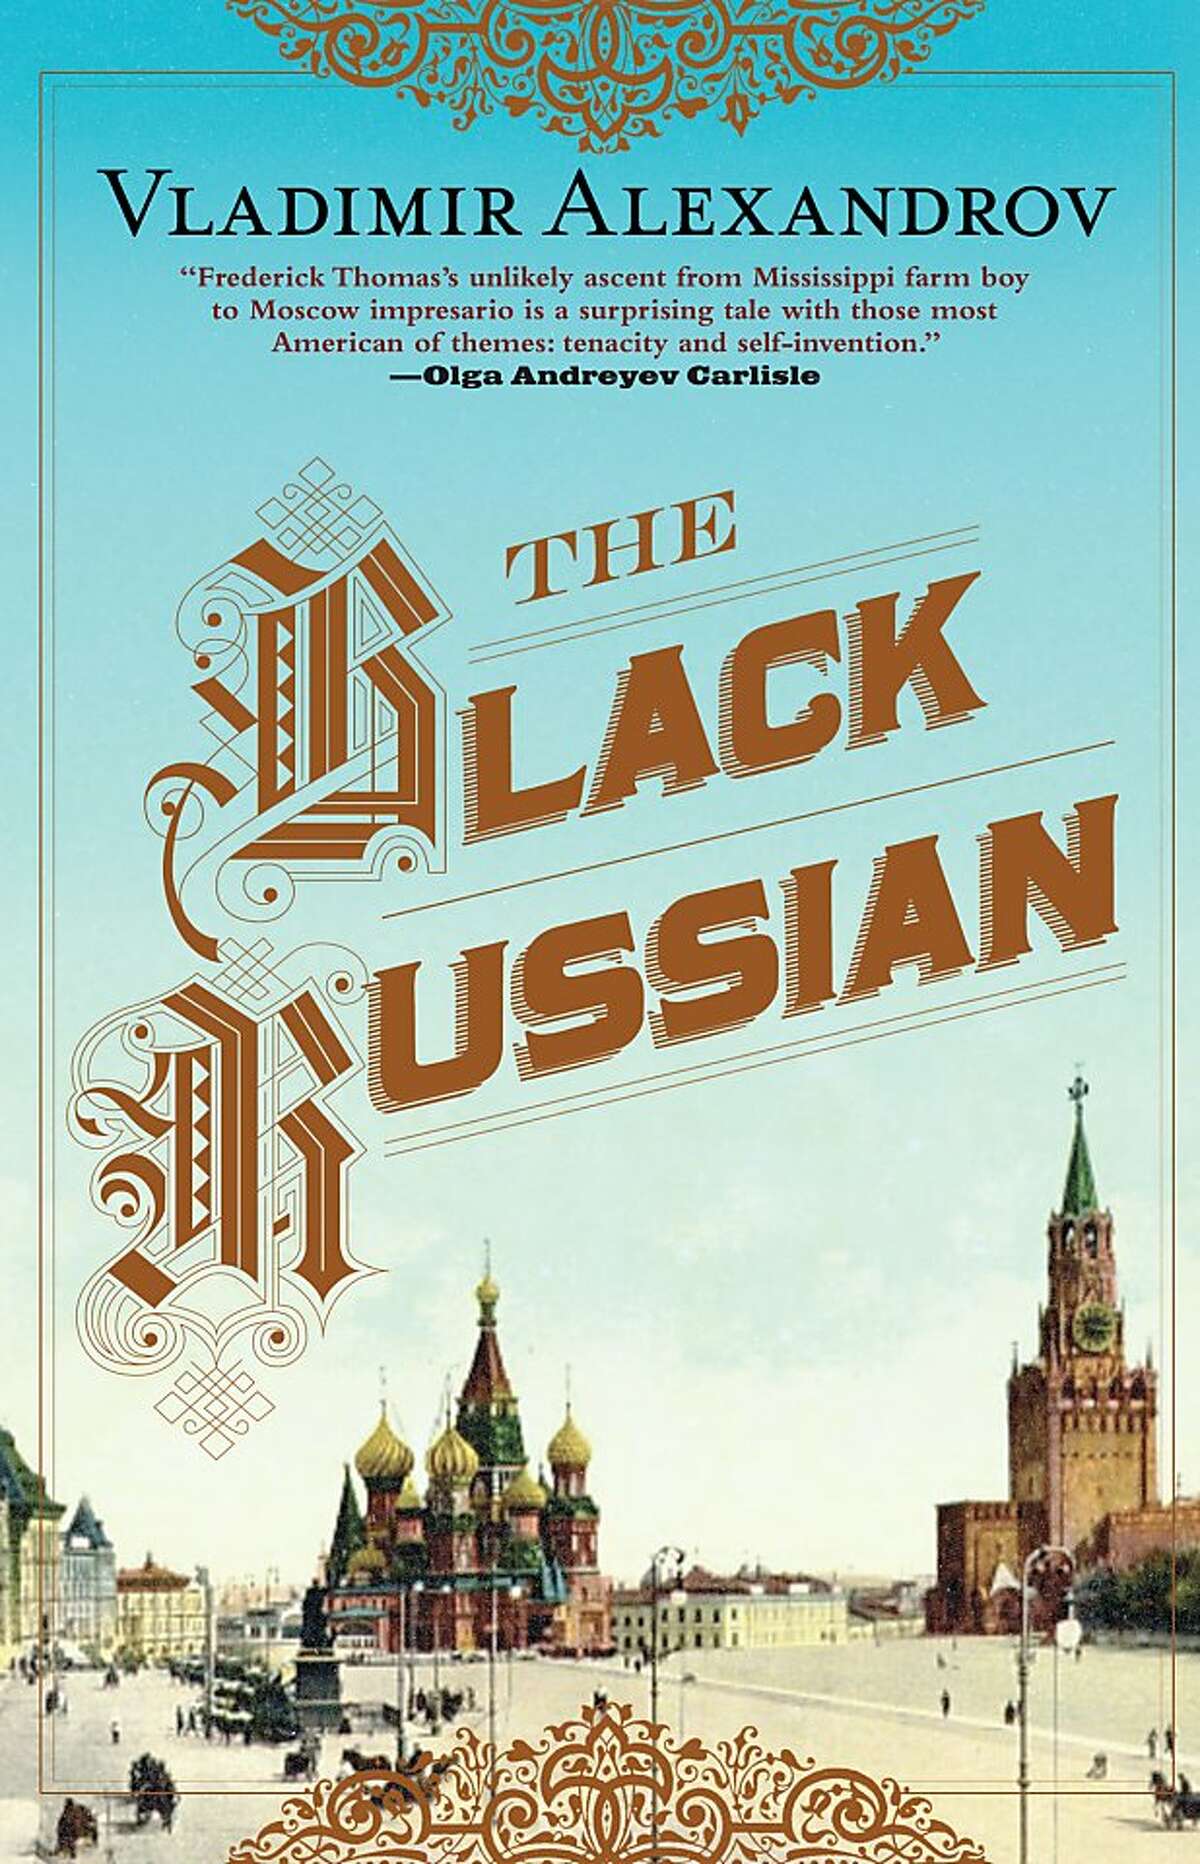 'The Black Russian'